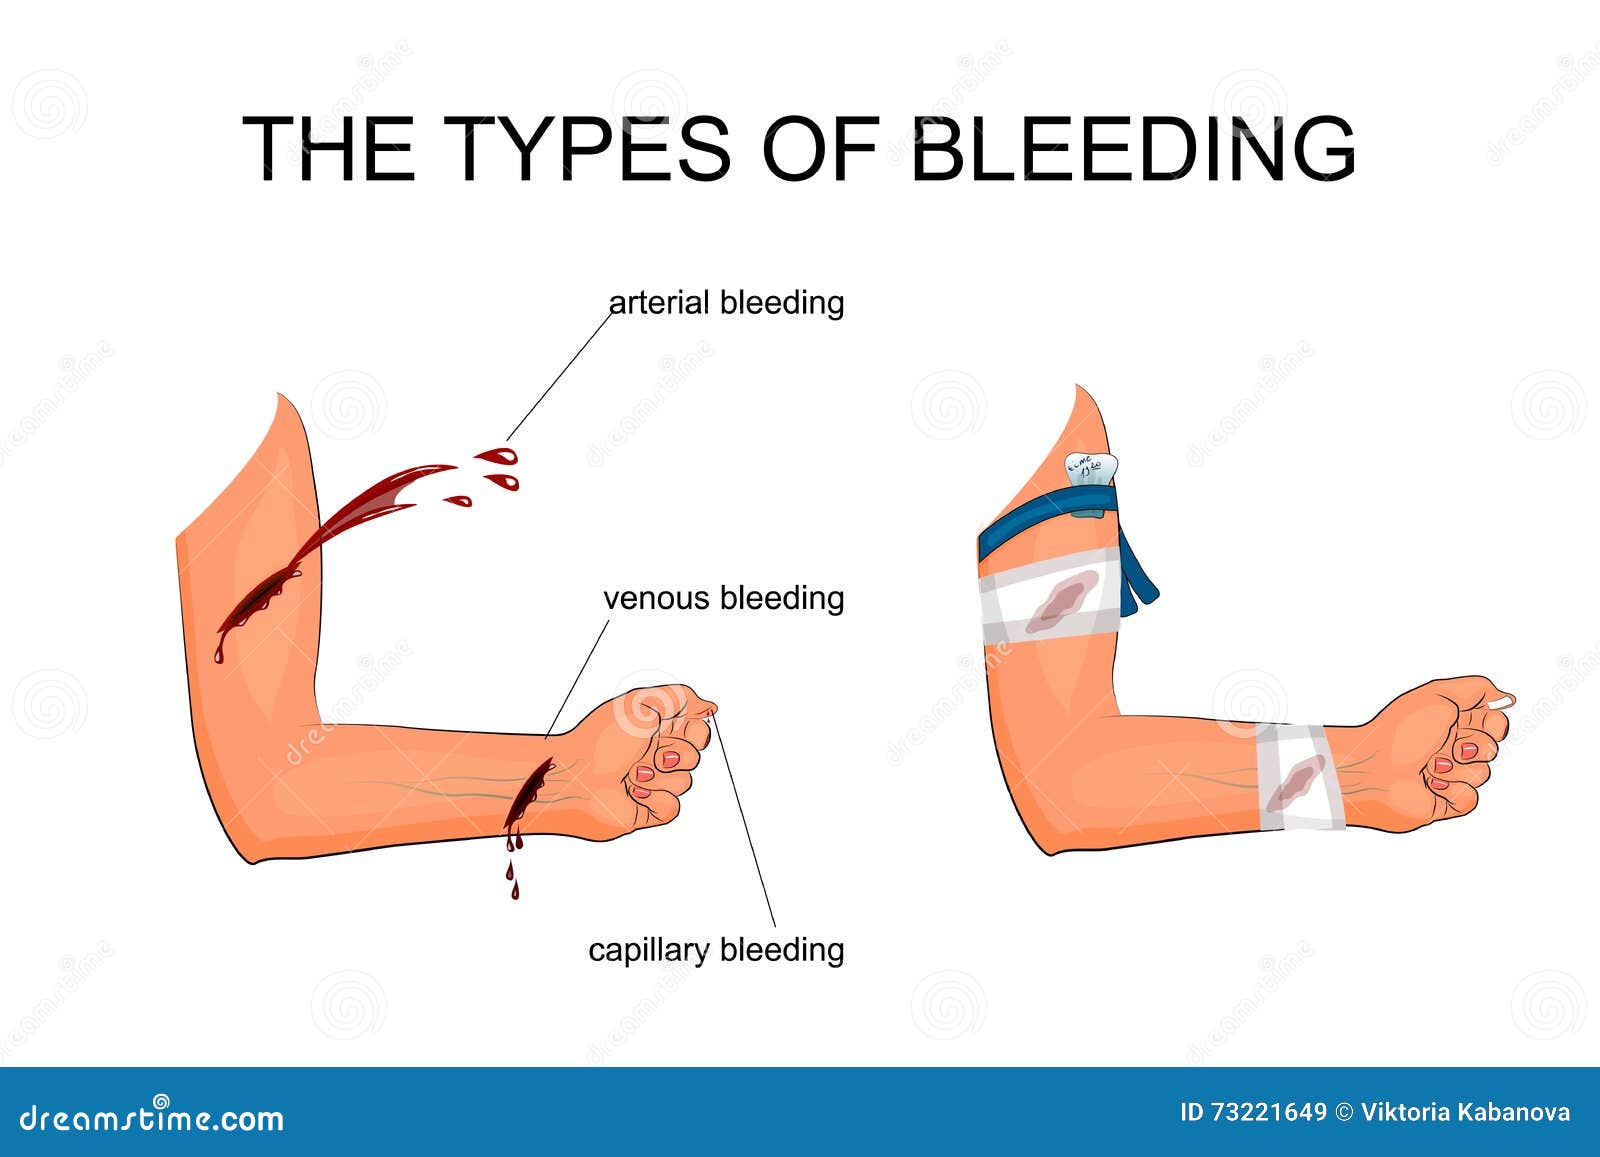 the types of bleeding